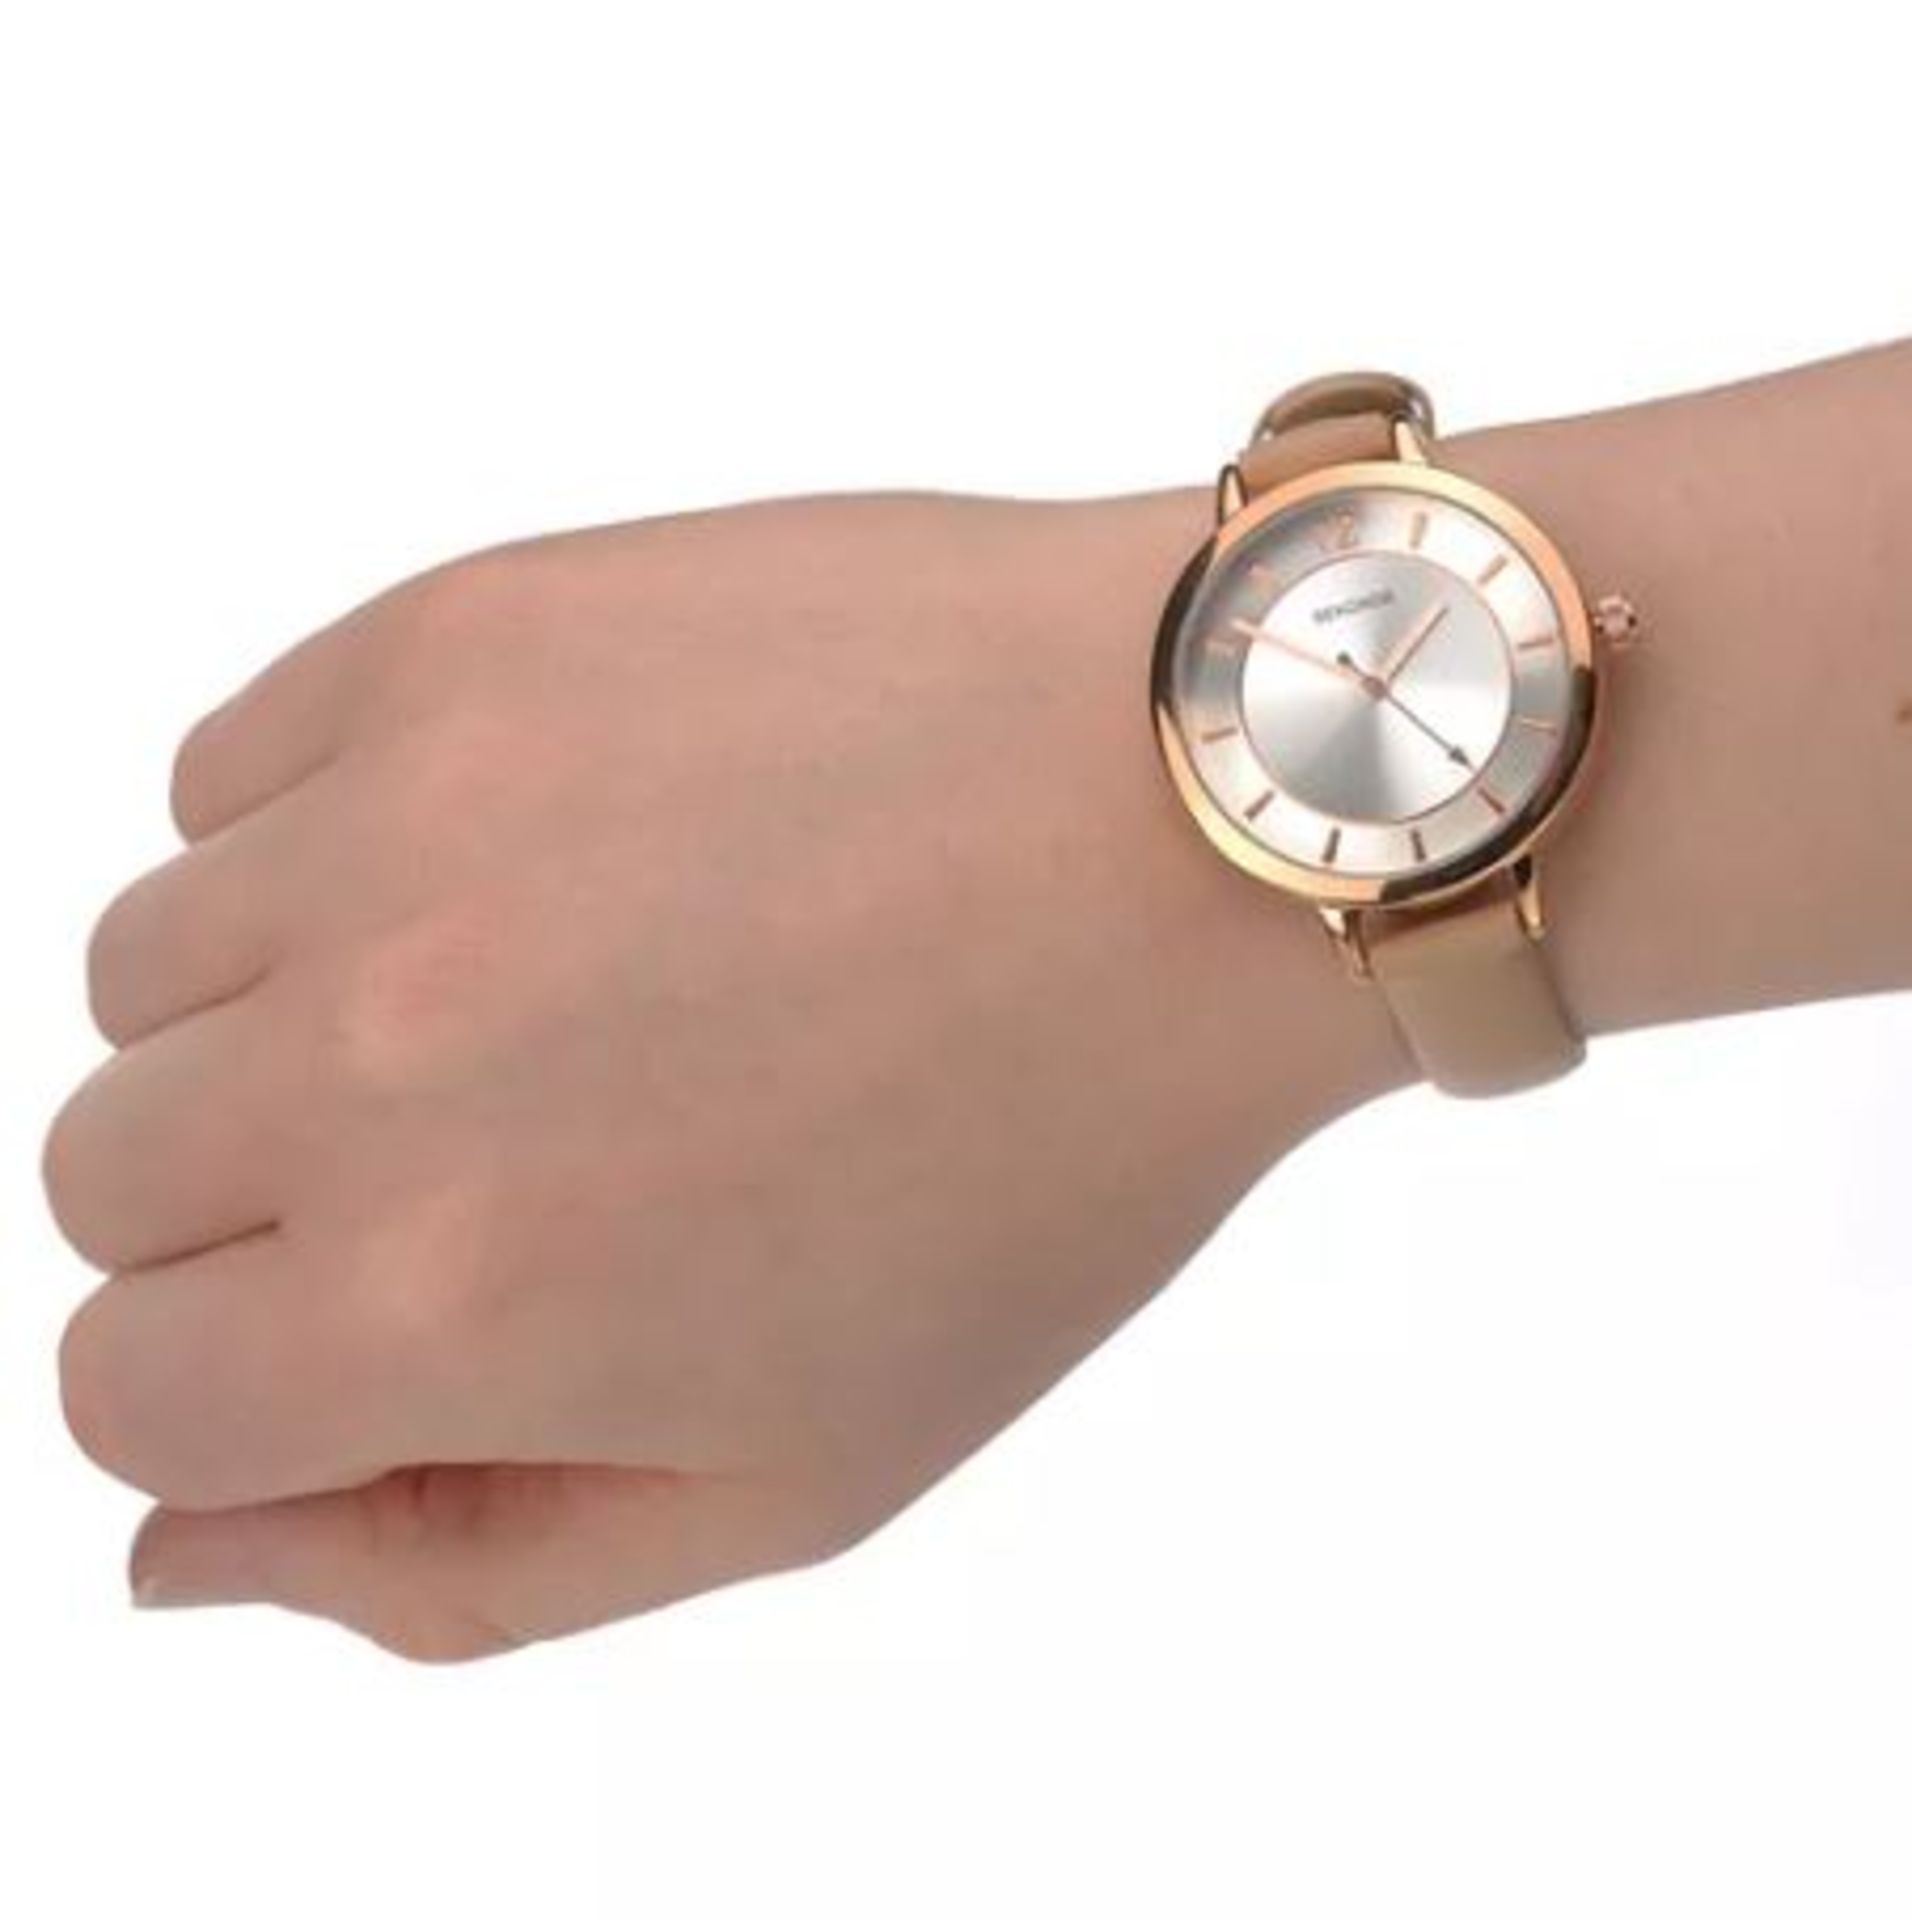 5 x Brand New Sekonda Women's Quartz Watch with Analogue Display 2137.28 - Image 3 of 4